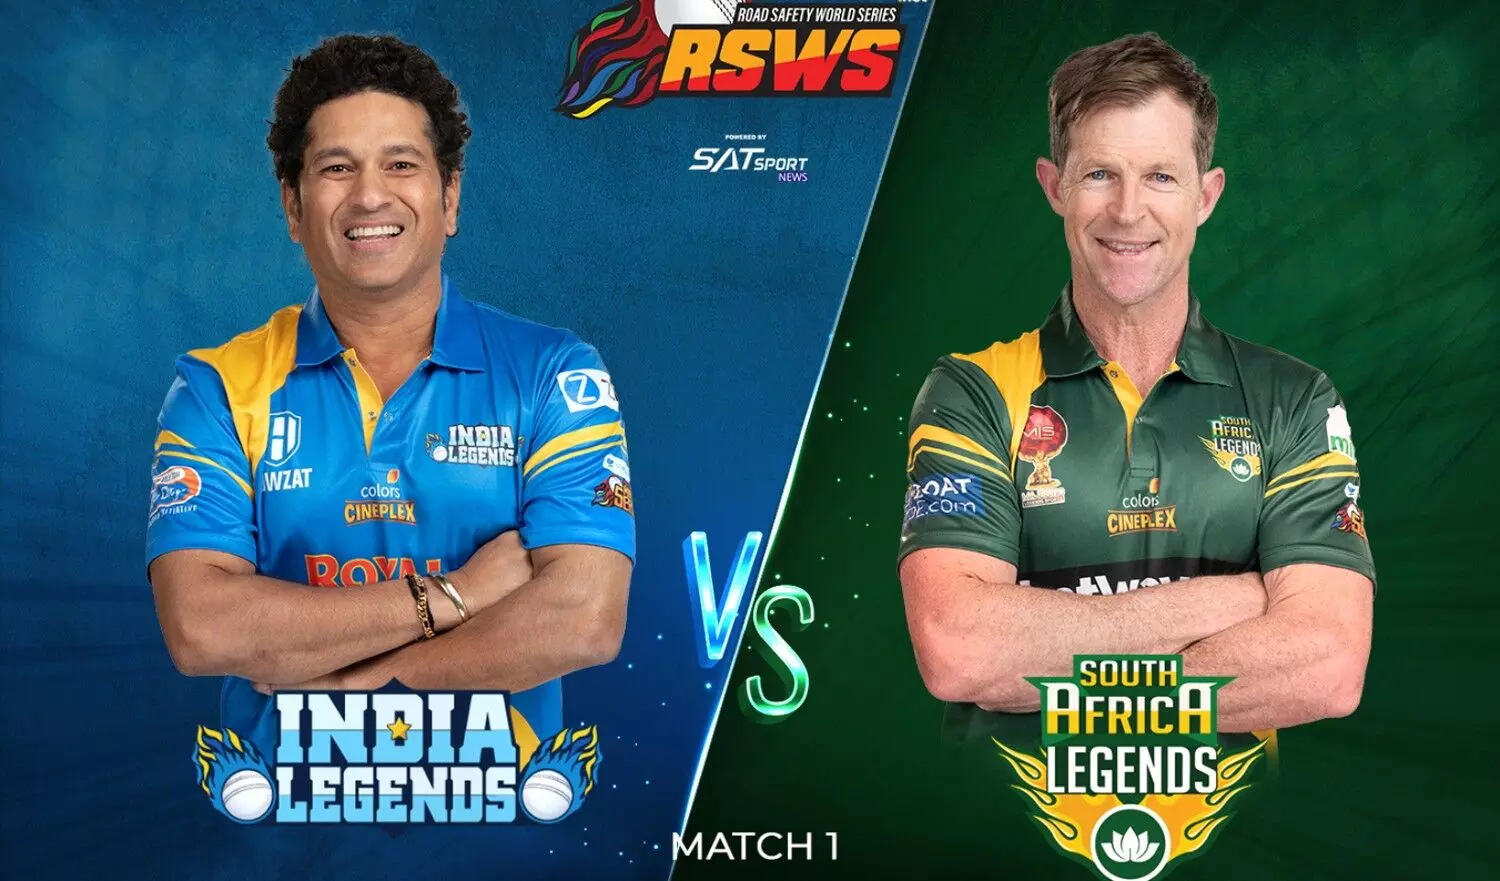 India Legends vs South Africa Legends